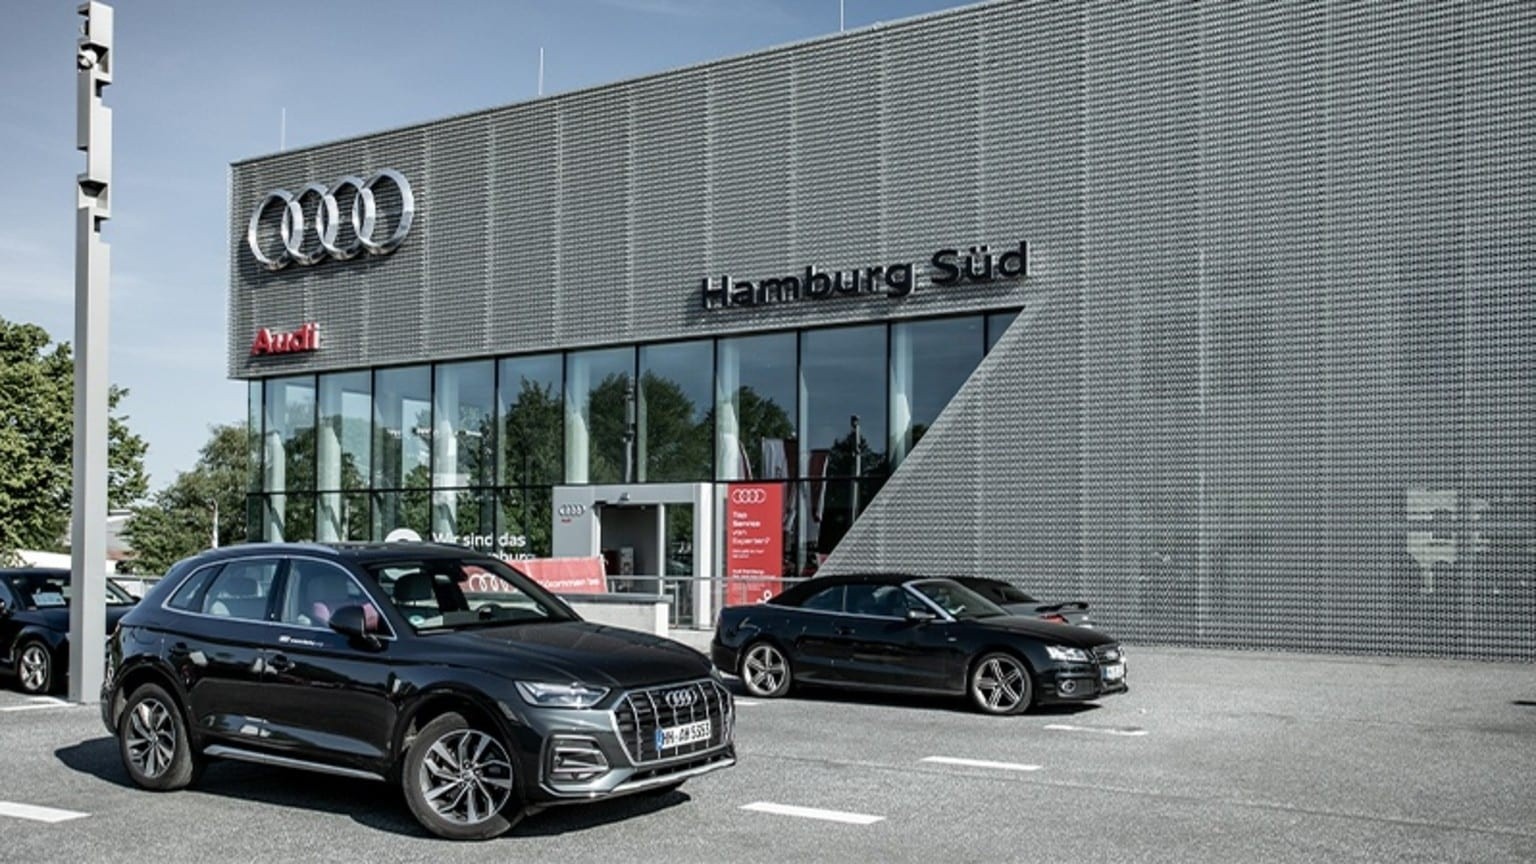 Audi Dachboxen  Audi Hamburg Süd